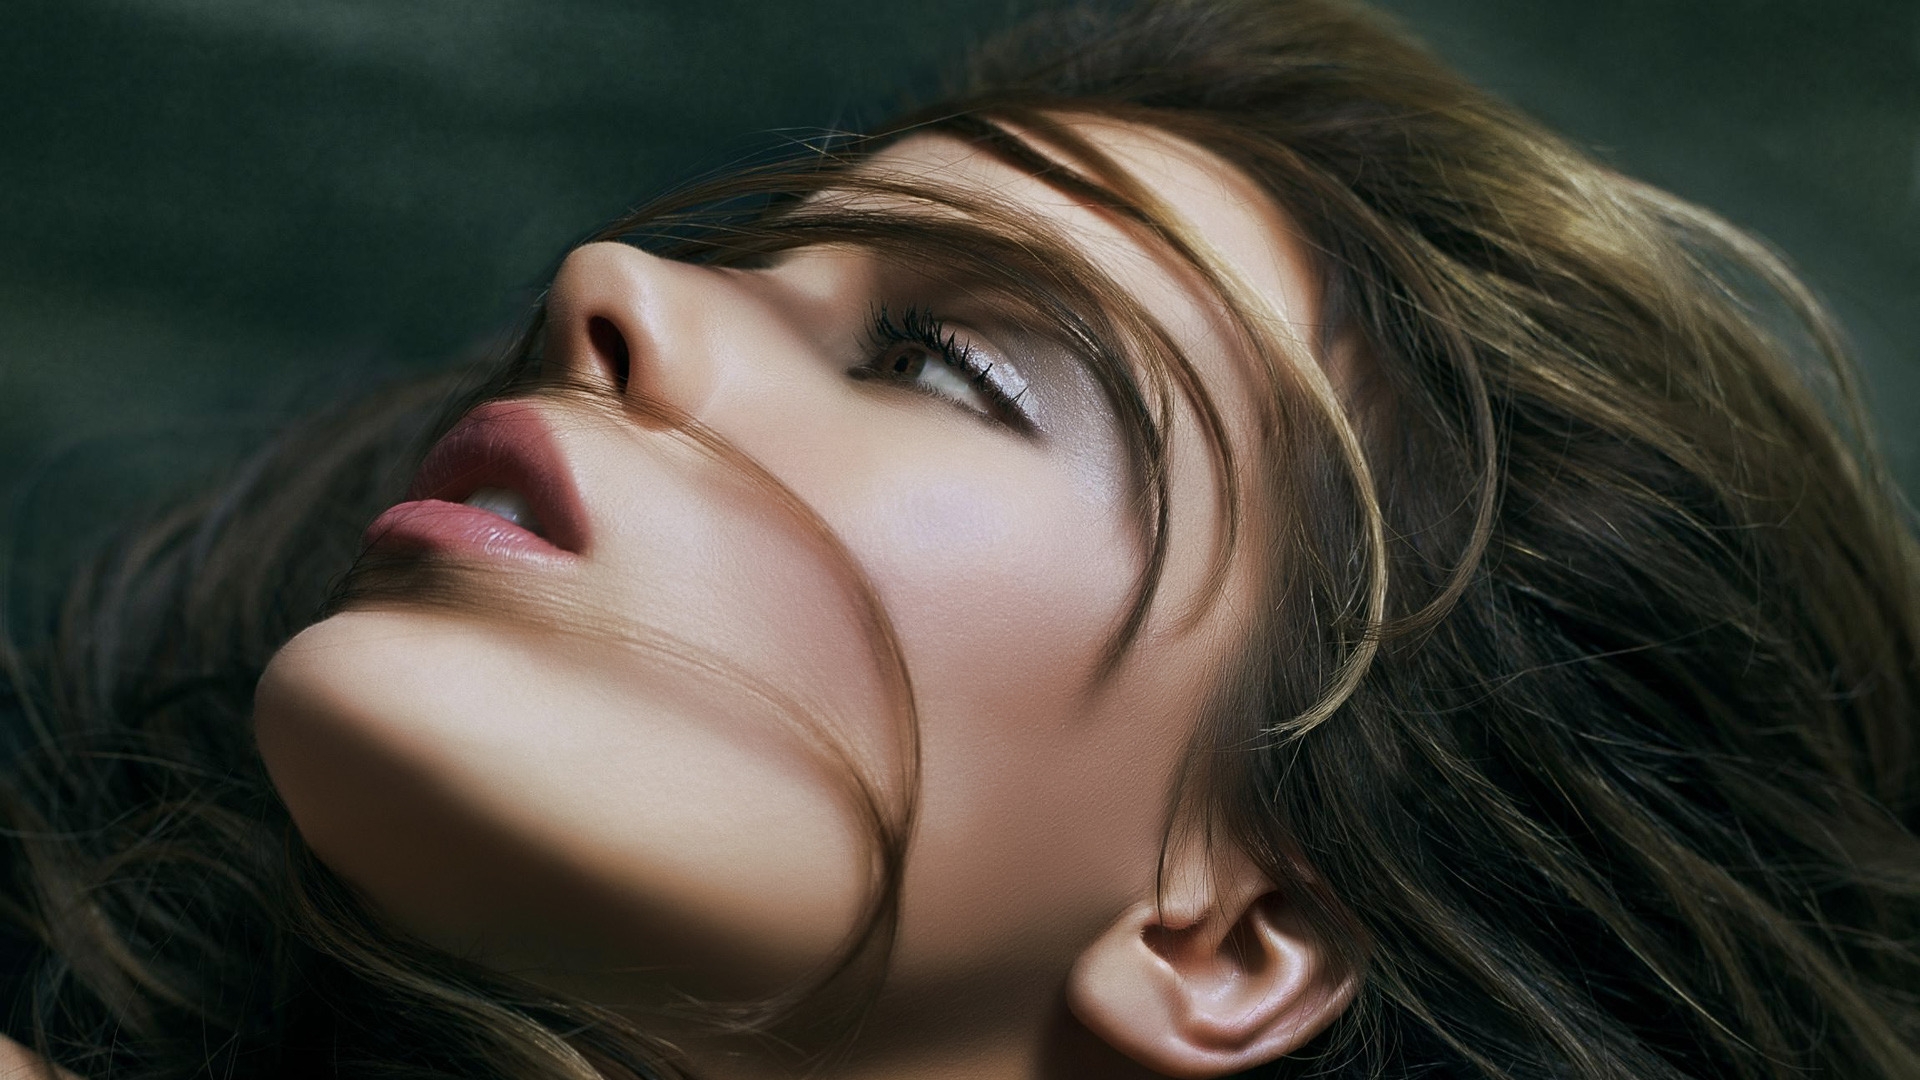 Kate Beckinsale Glamorous for 1920 x 1080 HDTV 1080p resolution